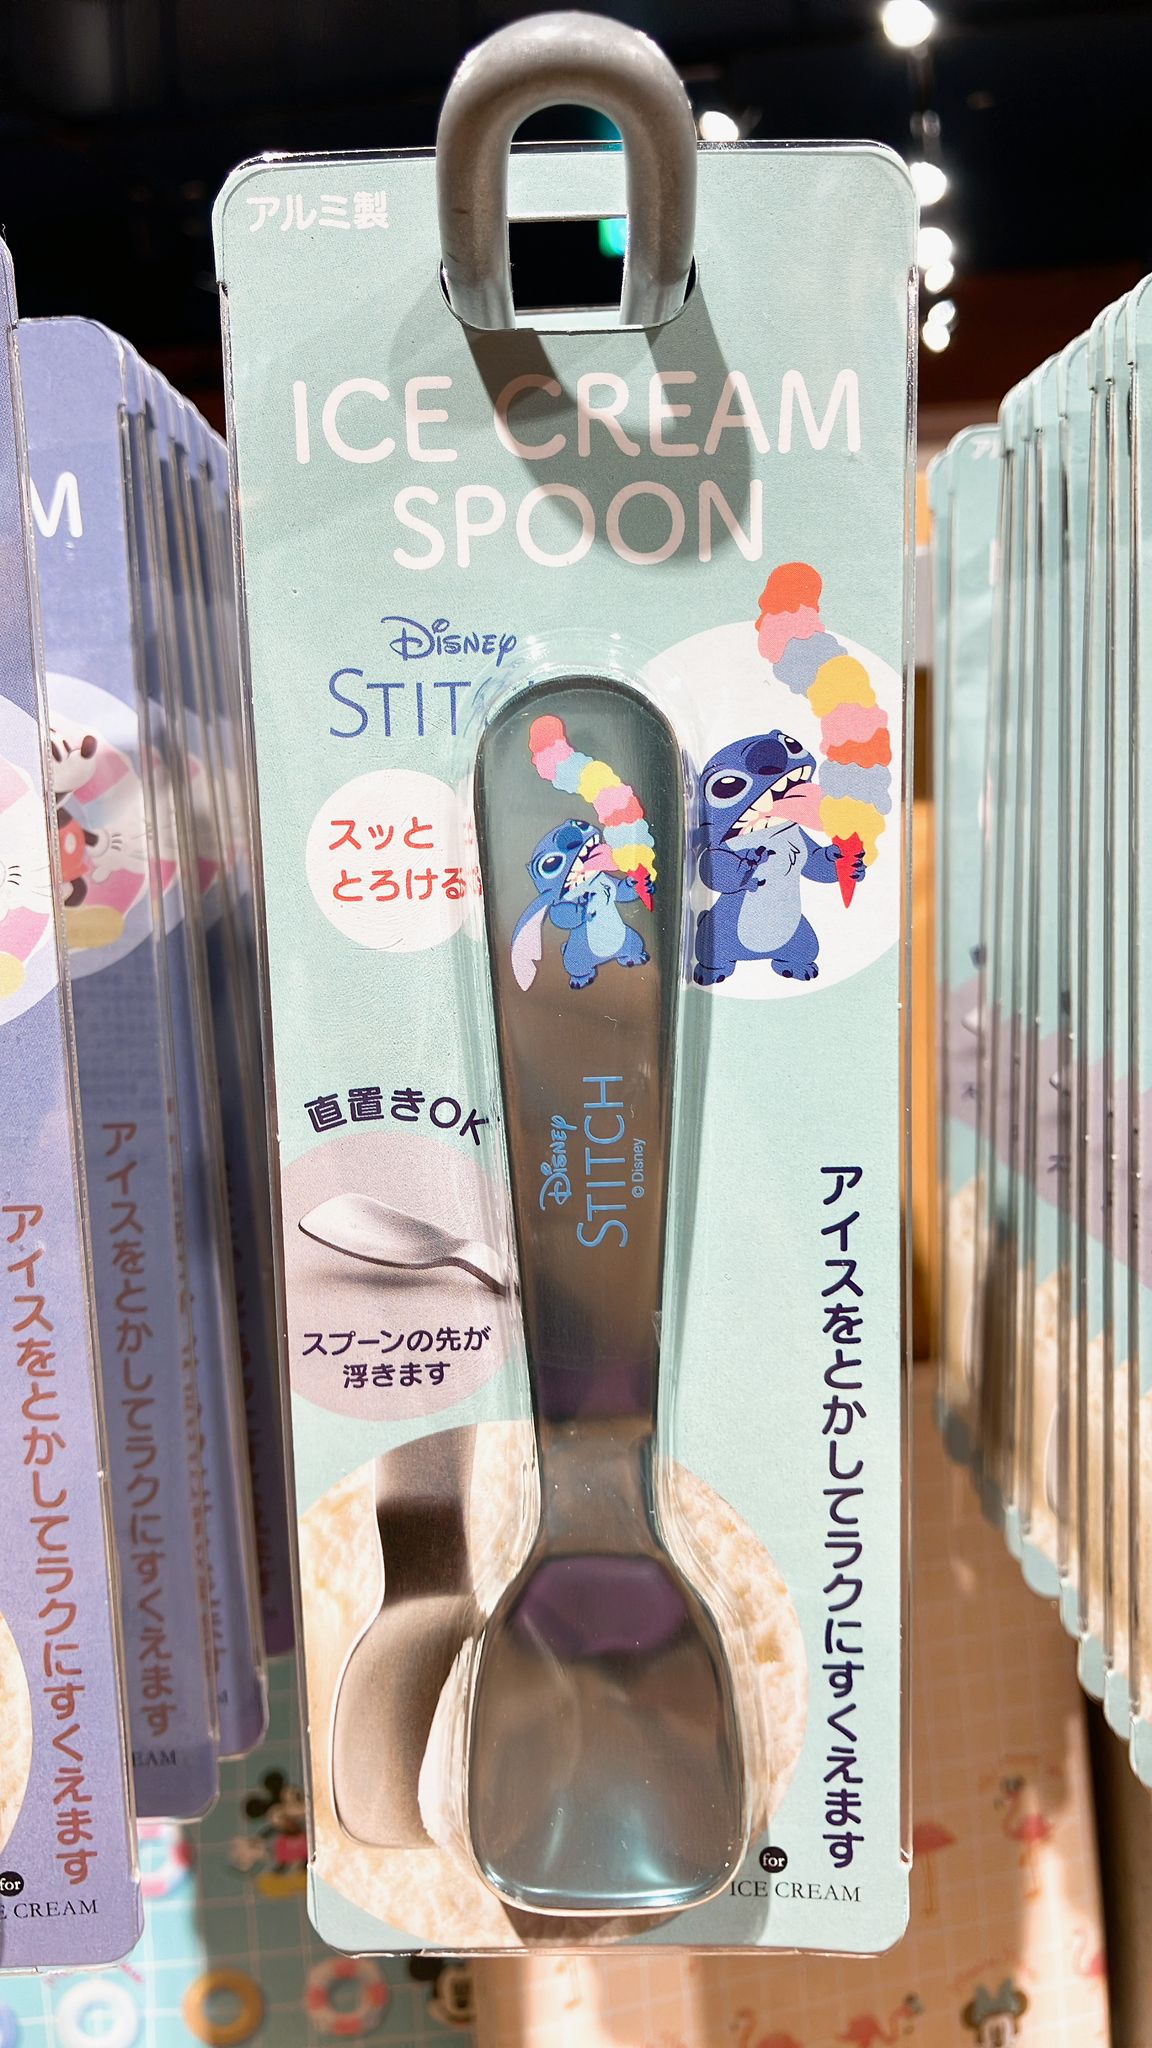 SDJ - Ice Cream Spoon (Stitch)